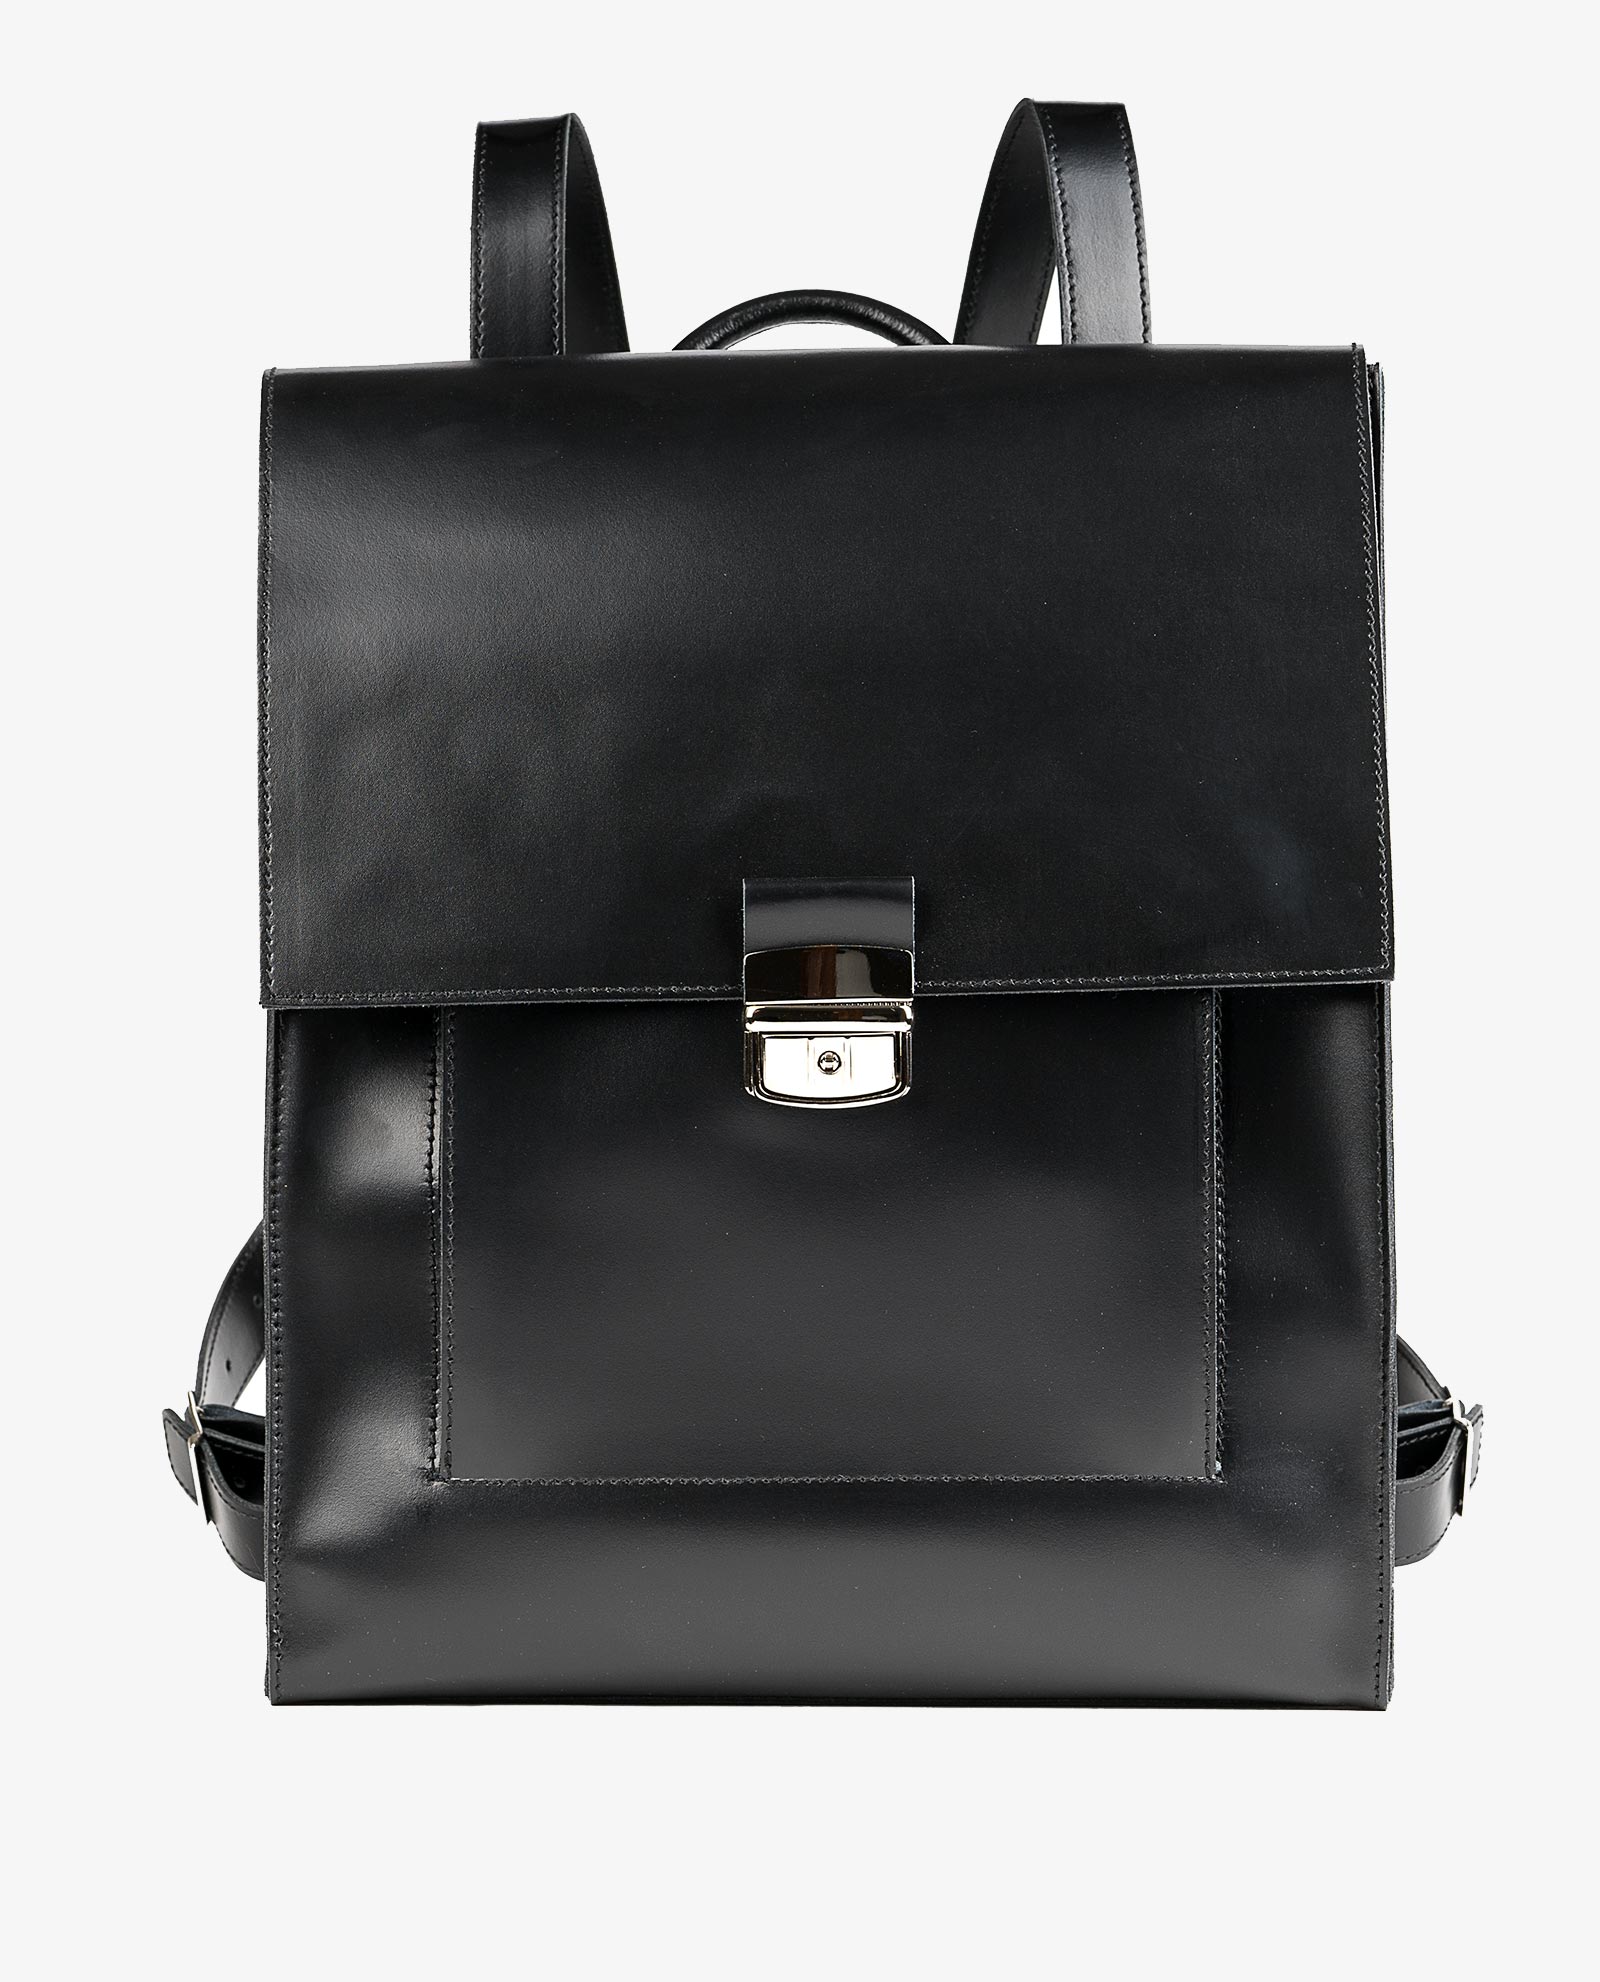 Buy Black Leather Backpack Briefcase | Italian Saffiano | DianaFlorian.com